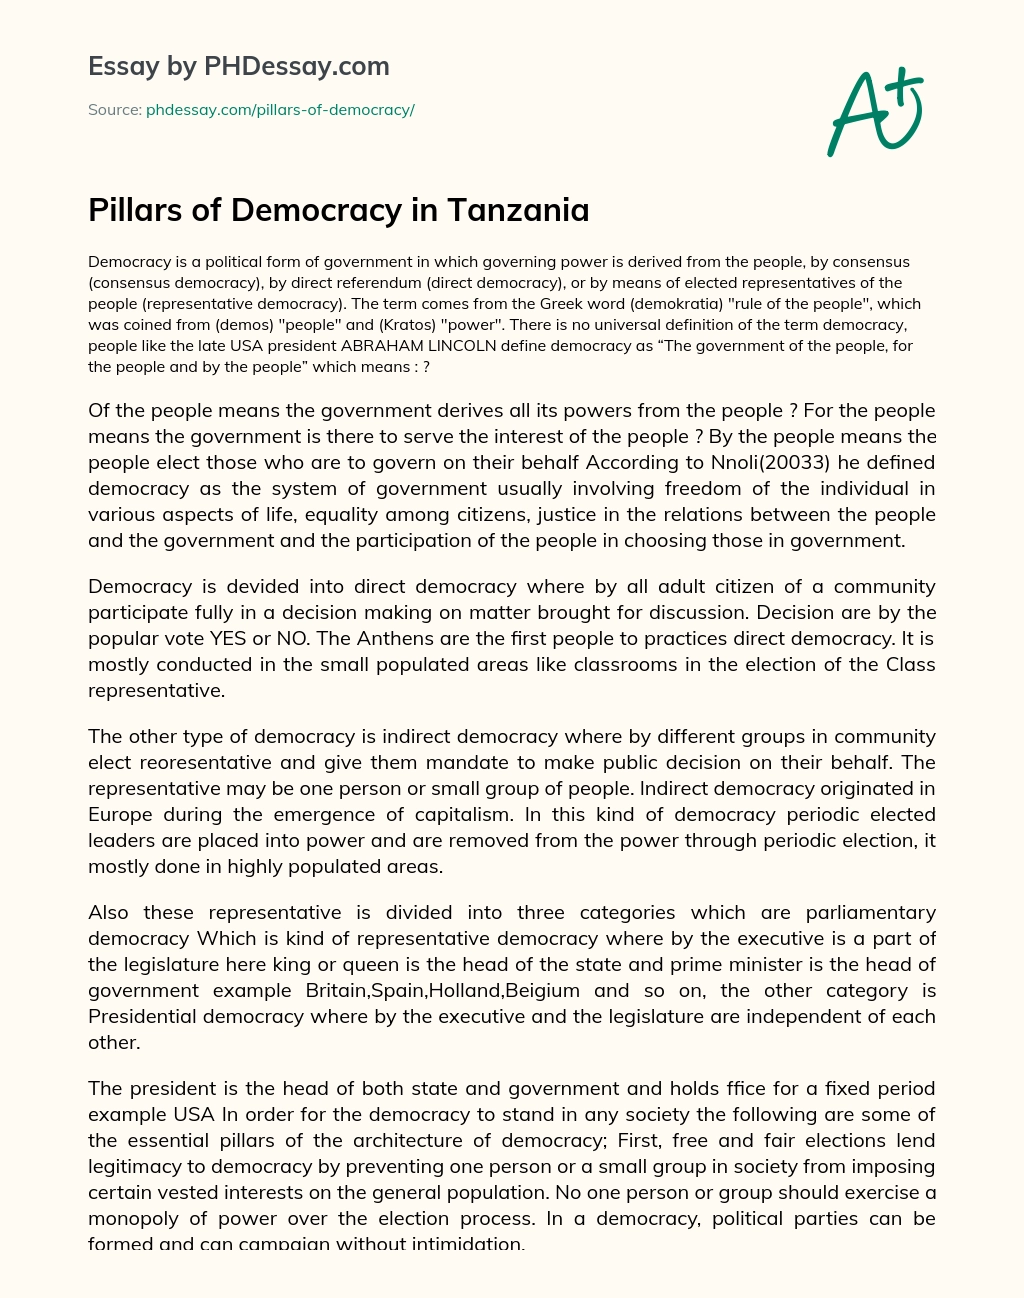 Pillars of Democracy in Tanzania essay